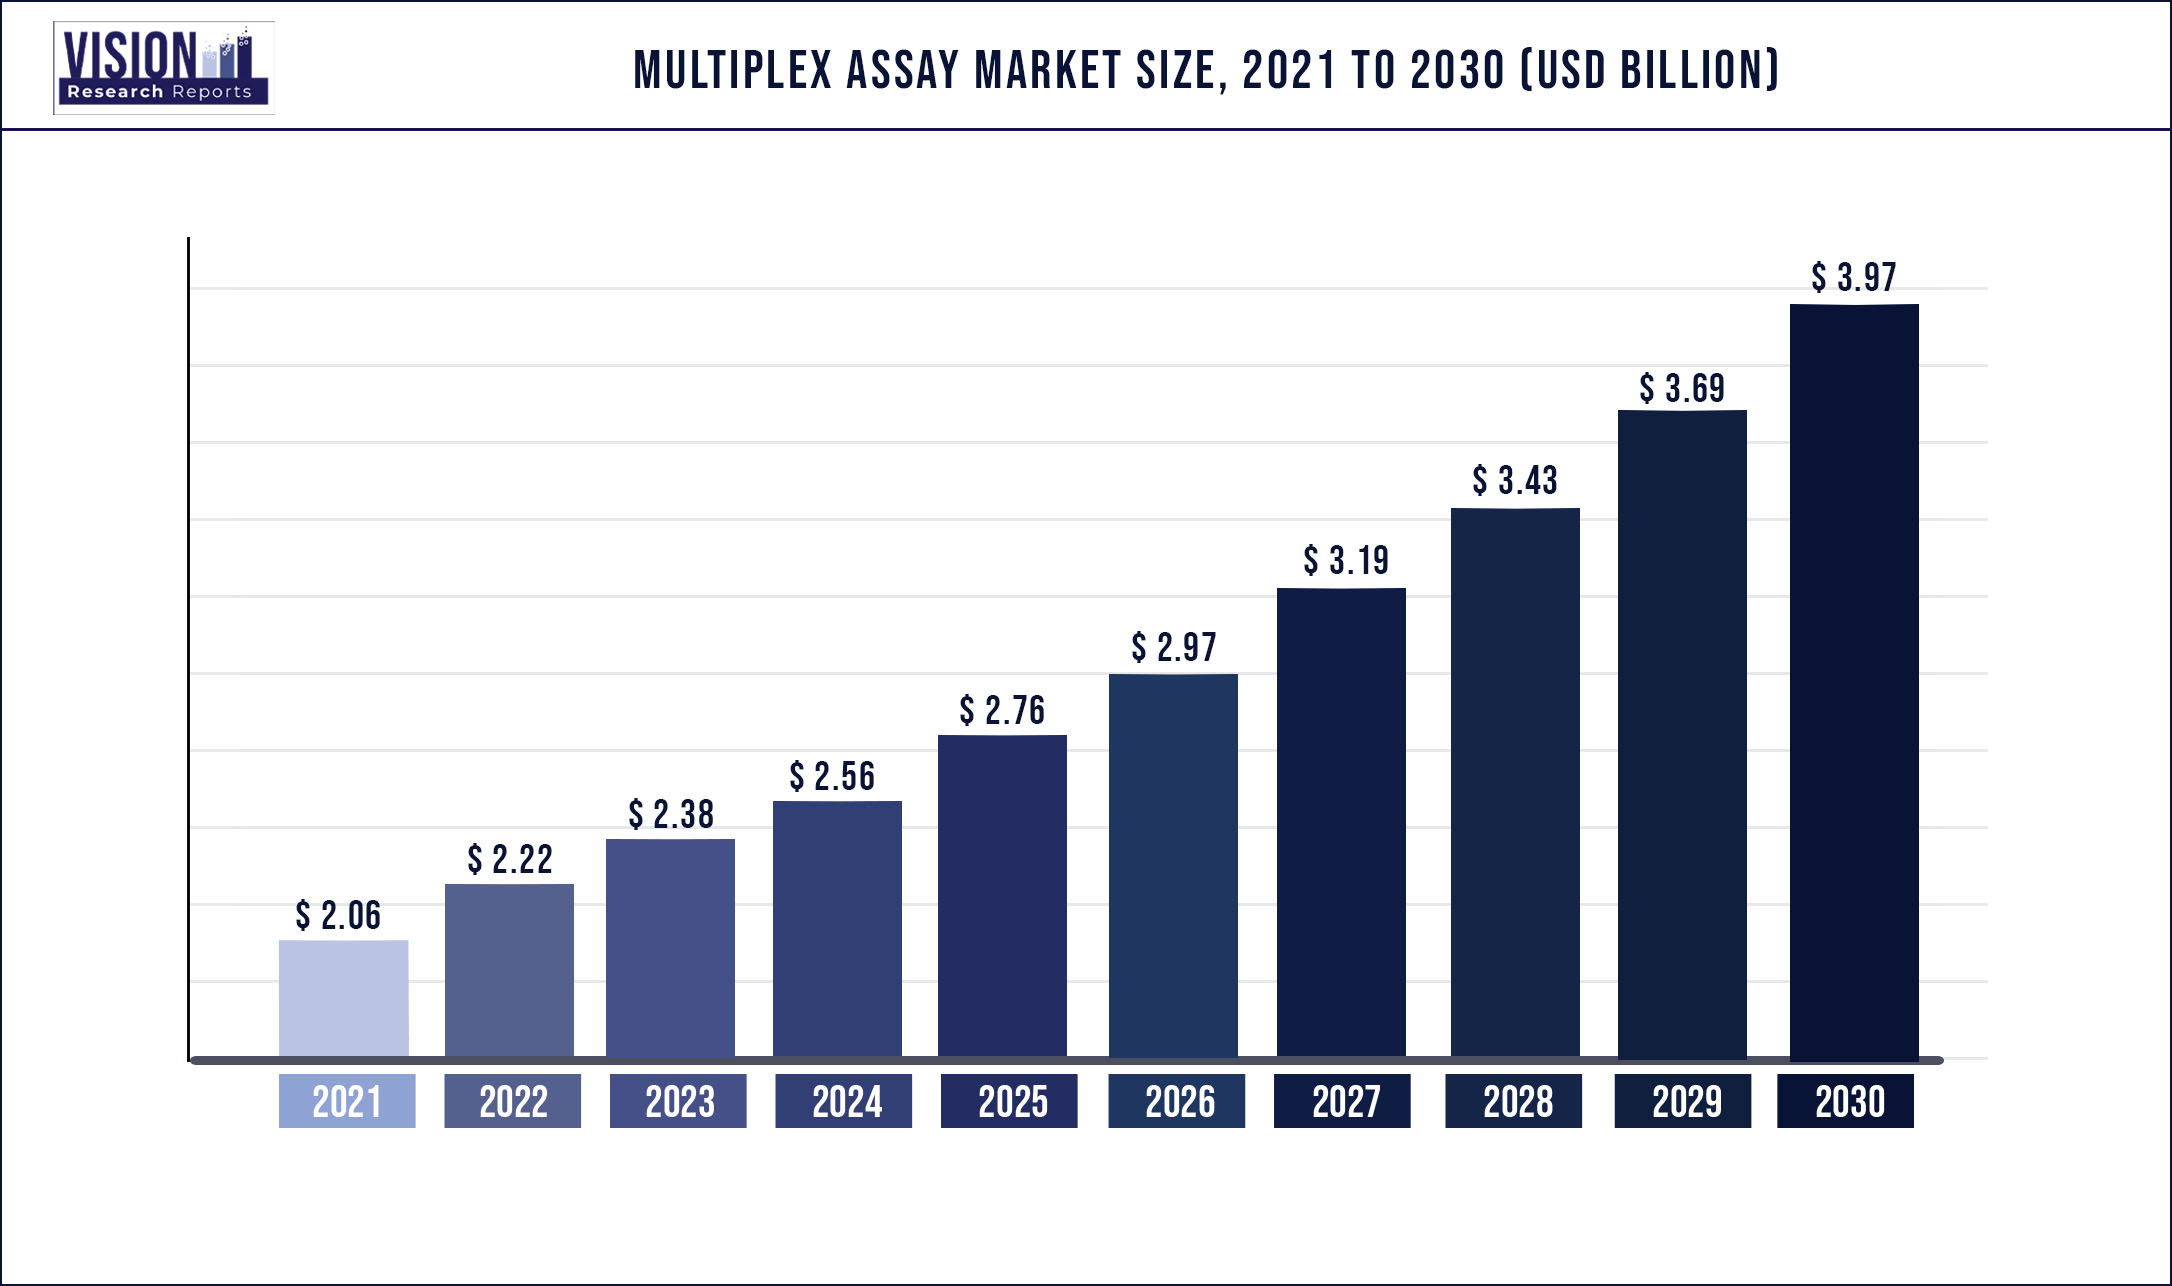 Multiplex Assay Market Size 2021 to 2030